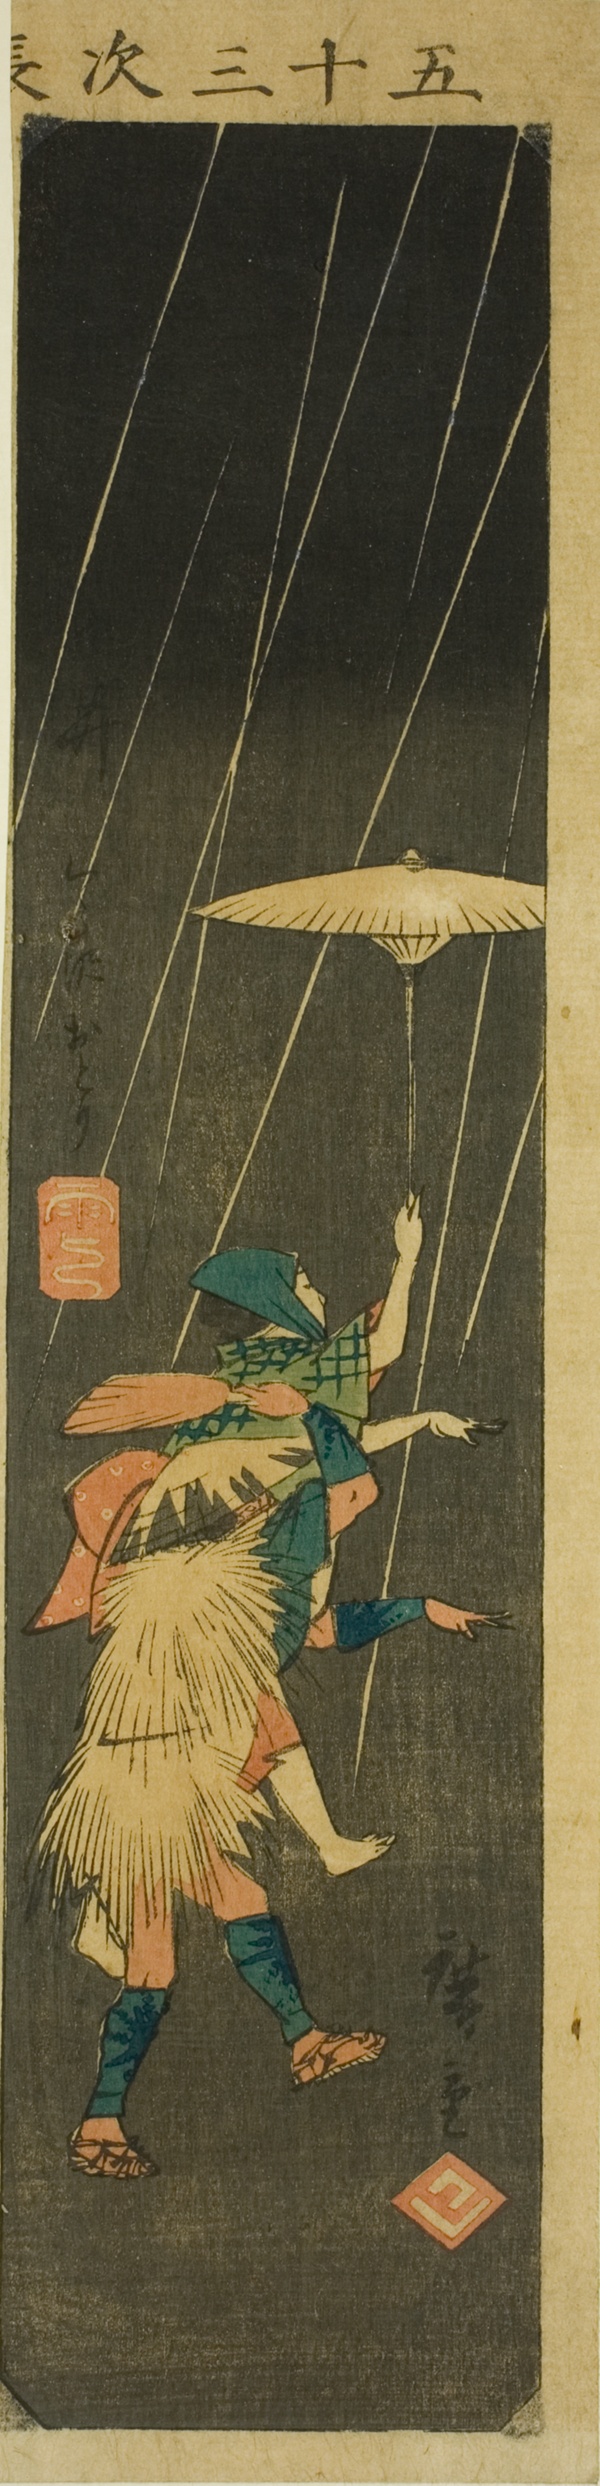 Yui: Kurusawa Dance (Yui, Kurusawa odori), section of sheet no. 5 from the series 